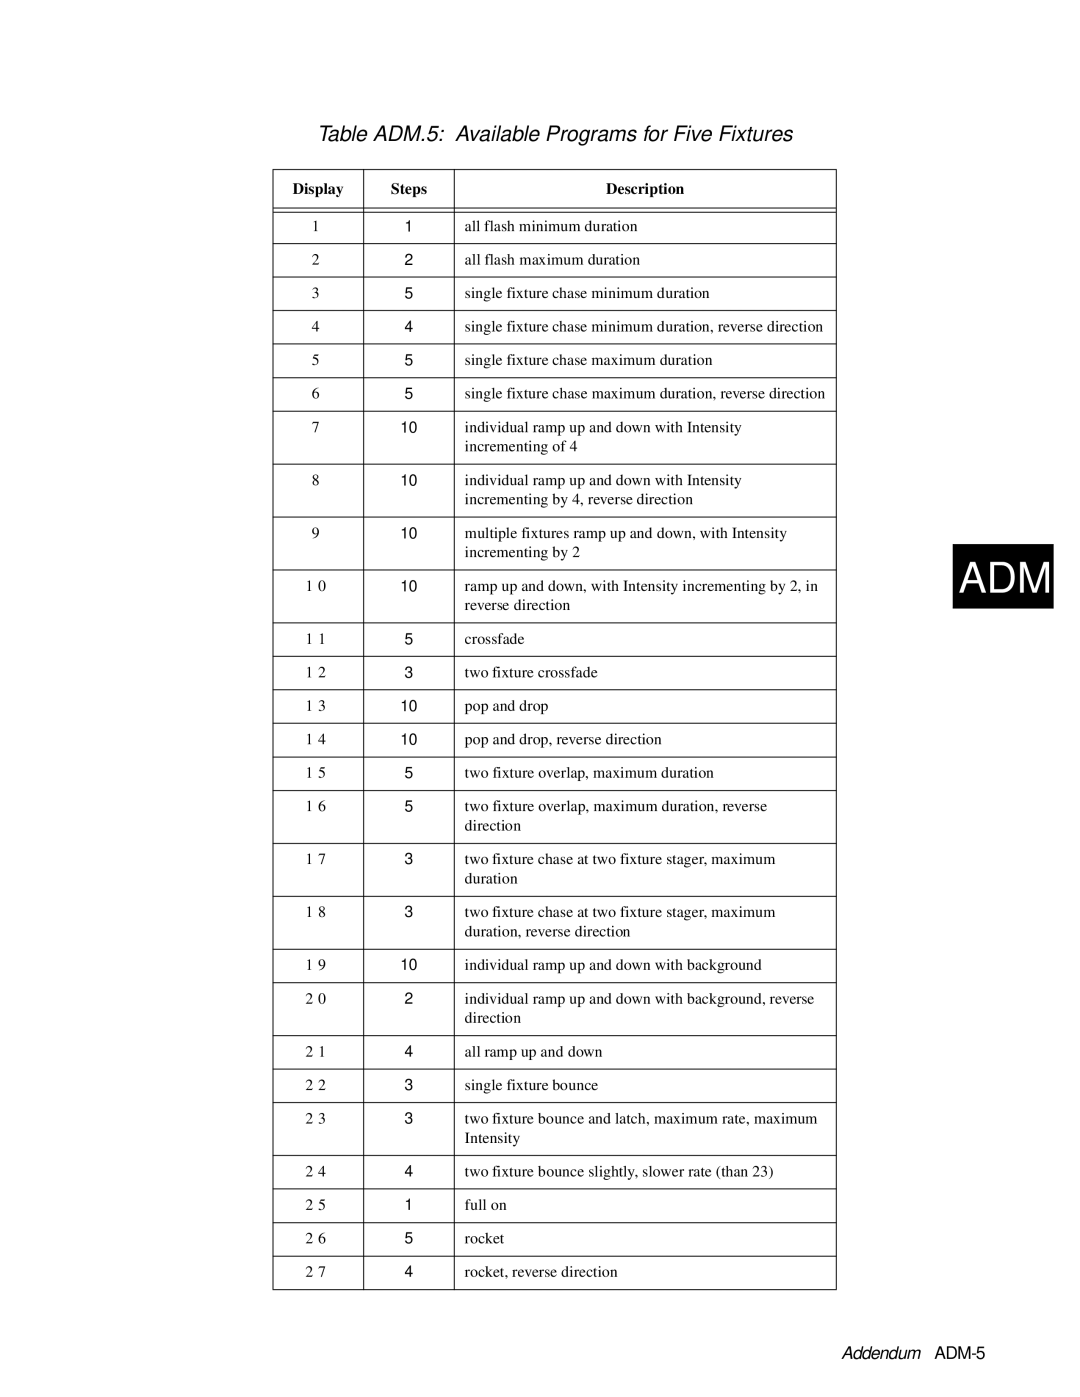 High End Systems AF1000 Table ADM.5 Available Programs for Five Fixtures, Addendum ADM-5, Display, Steps, Description 